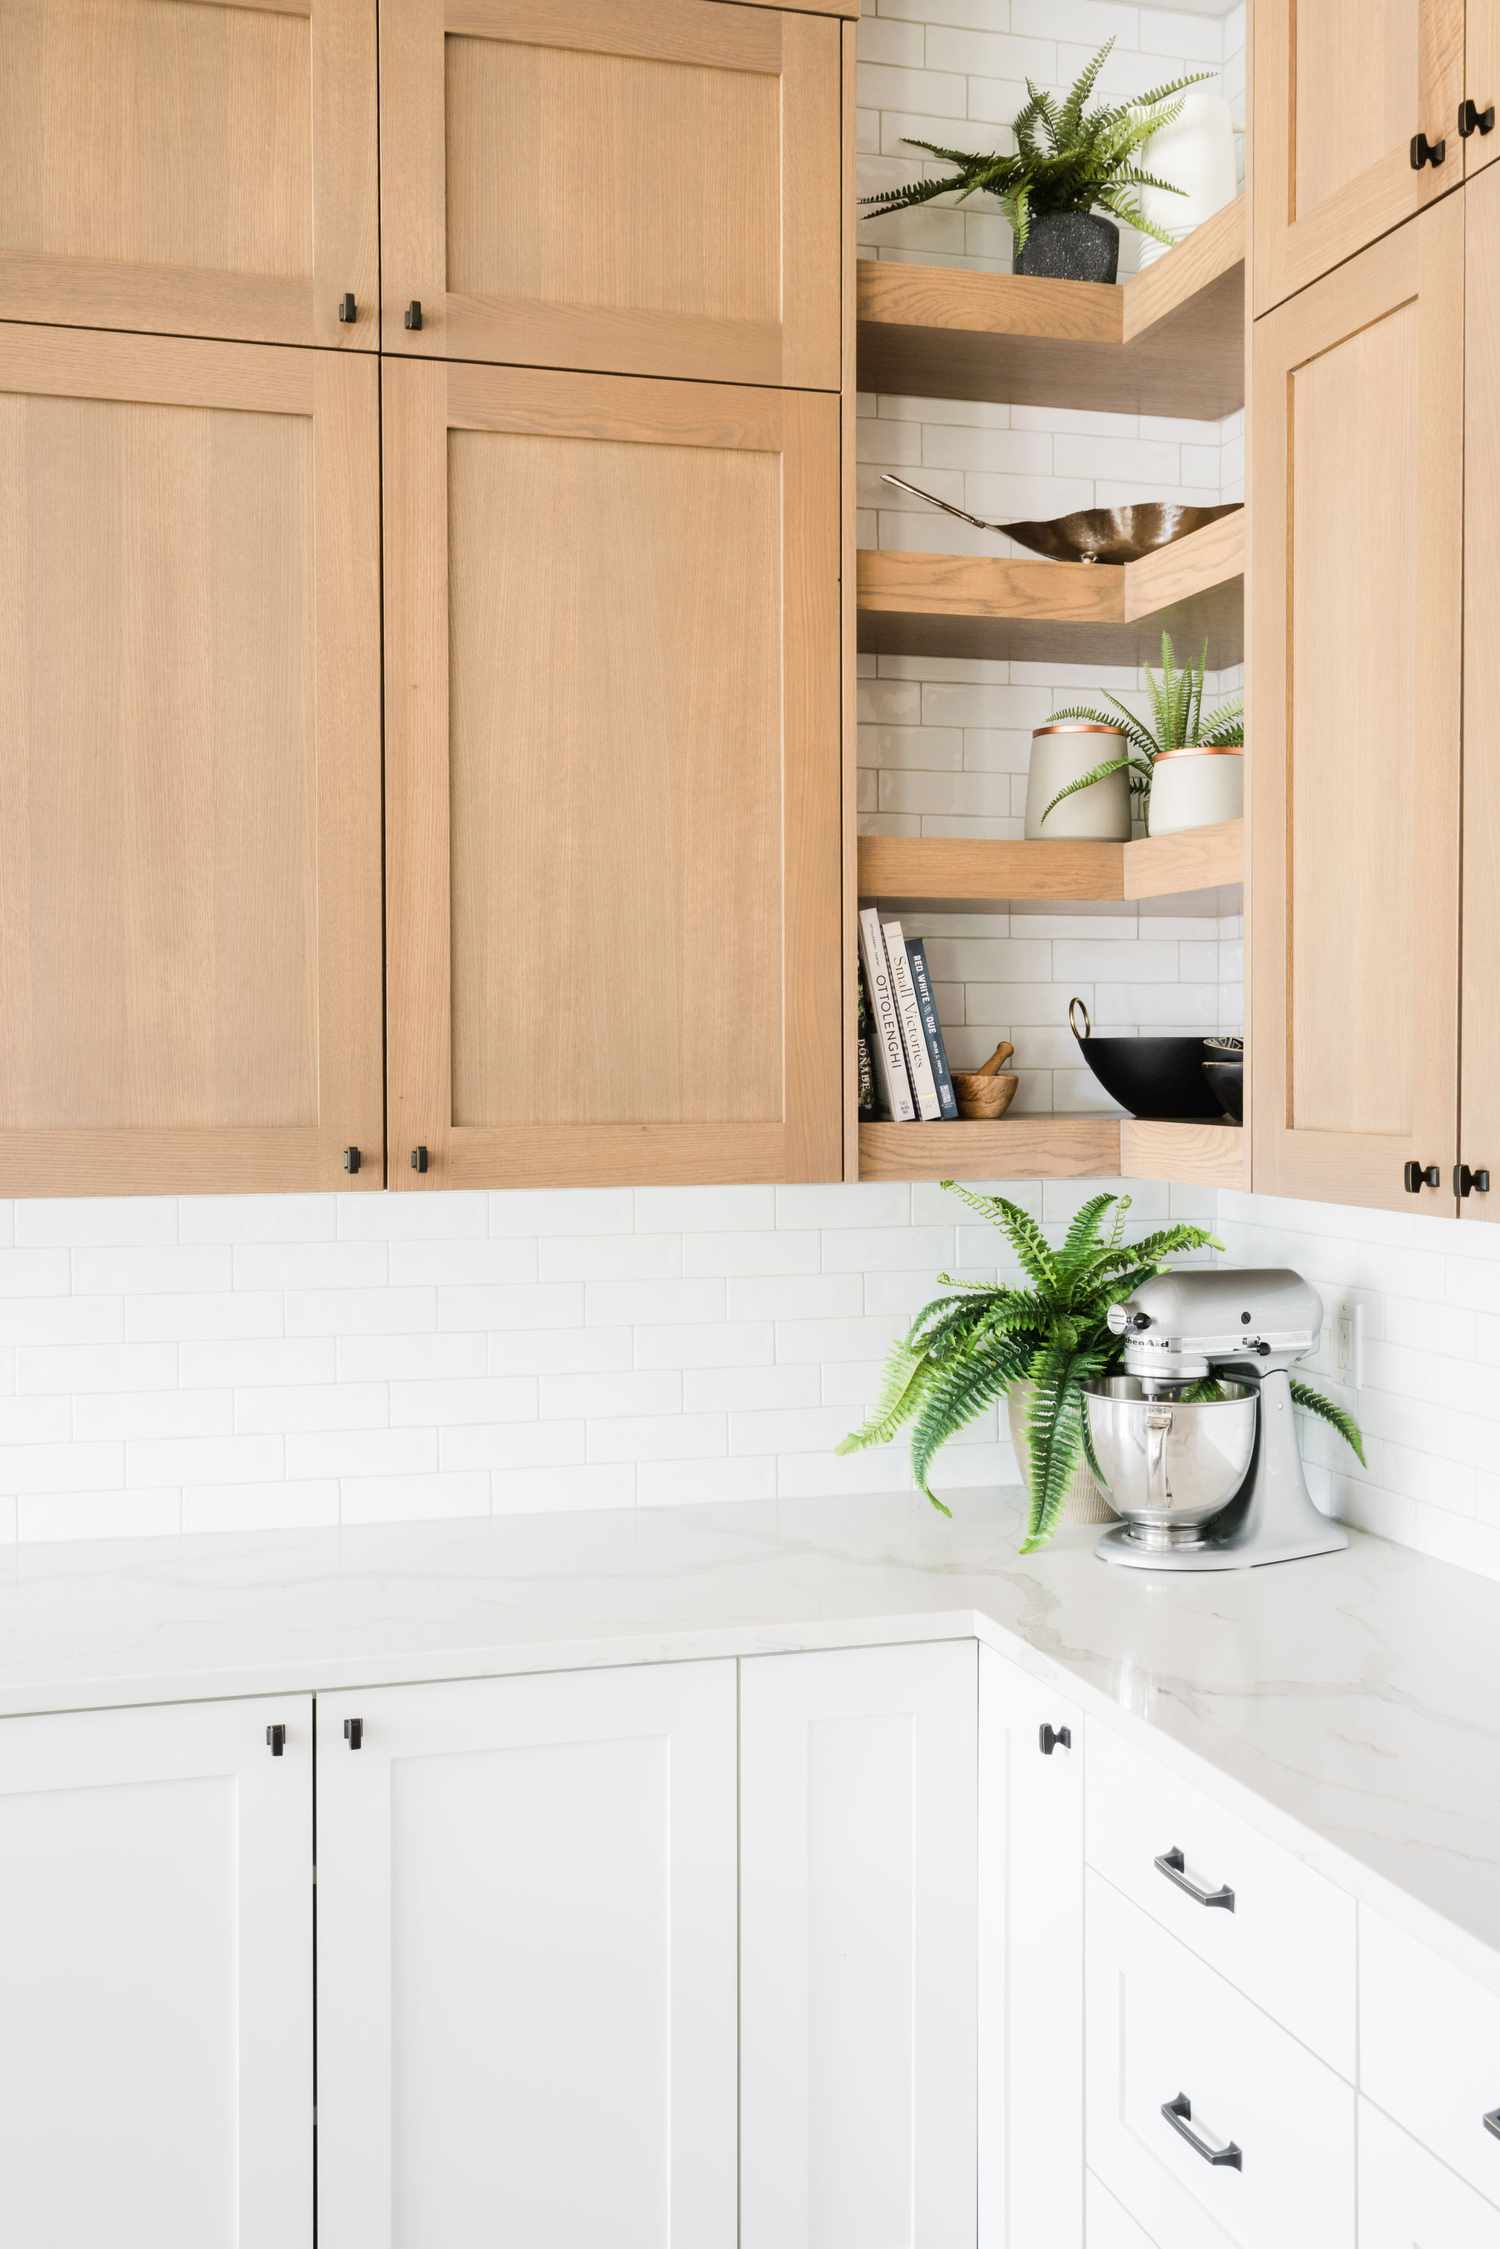 Corner Cabinet Or Shelf For Your Space, Corner Open Shelving Kitchen